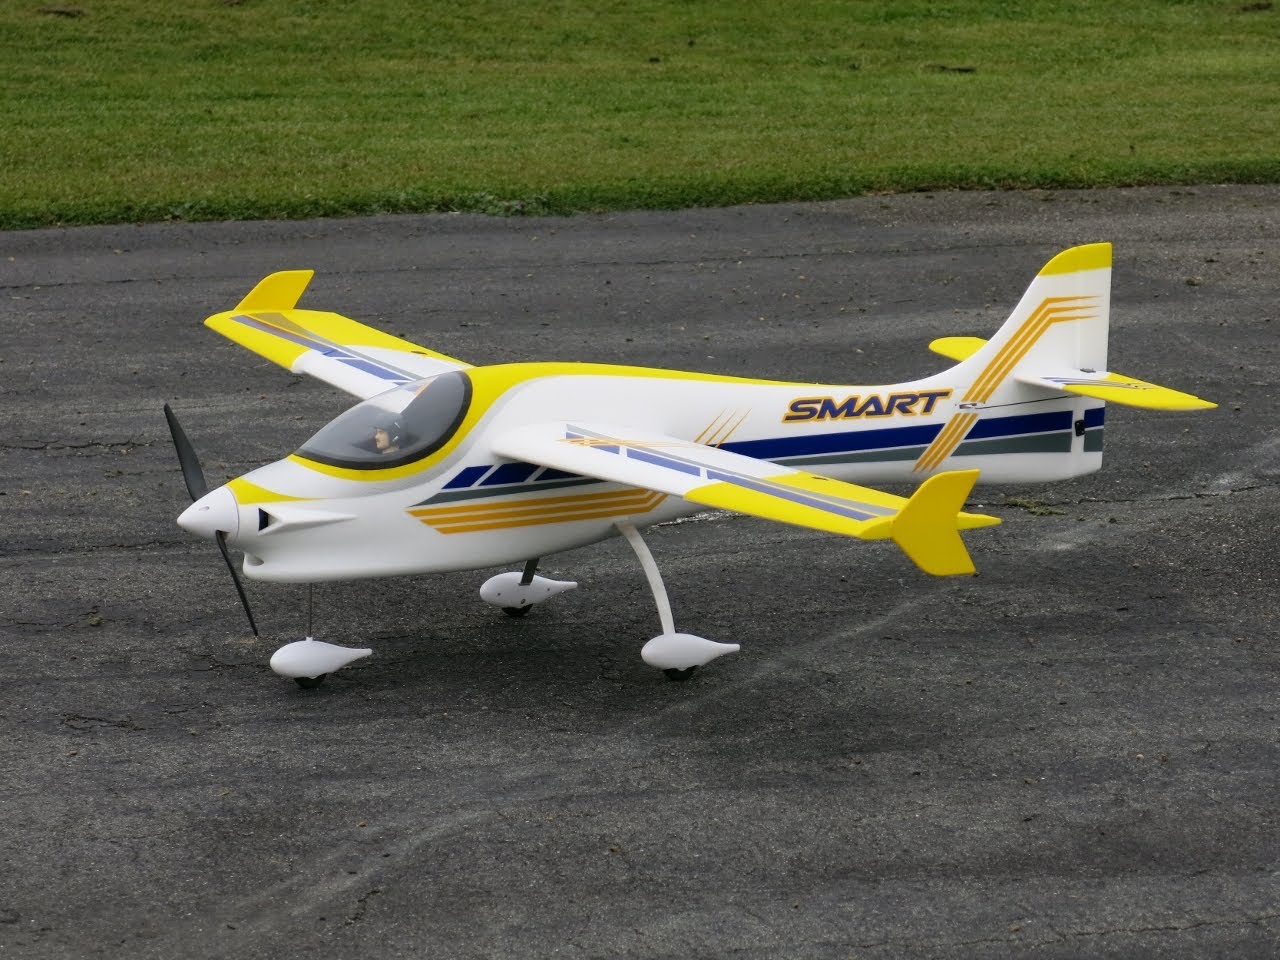 Dynam Smart Trainer 1500mm (59") Wingspan Electric RC Plane PNP - General  Hobby